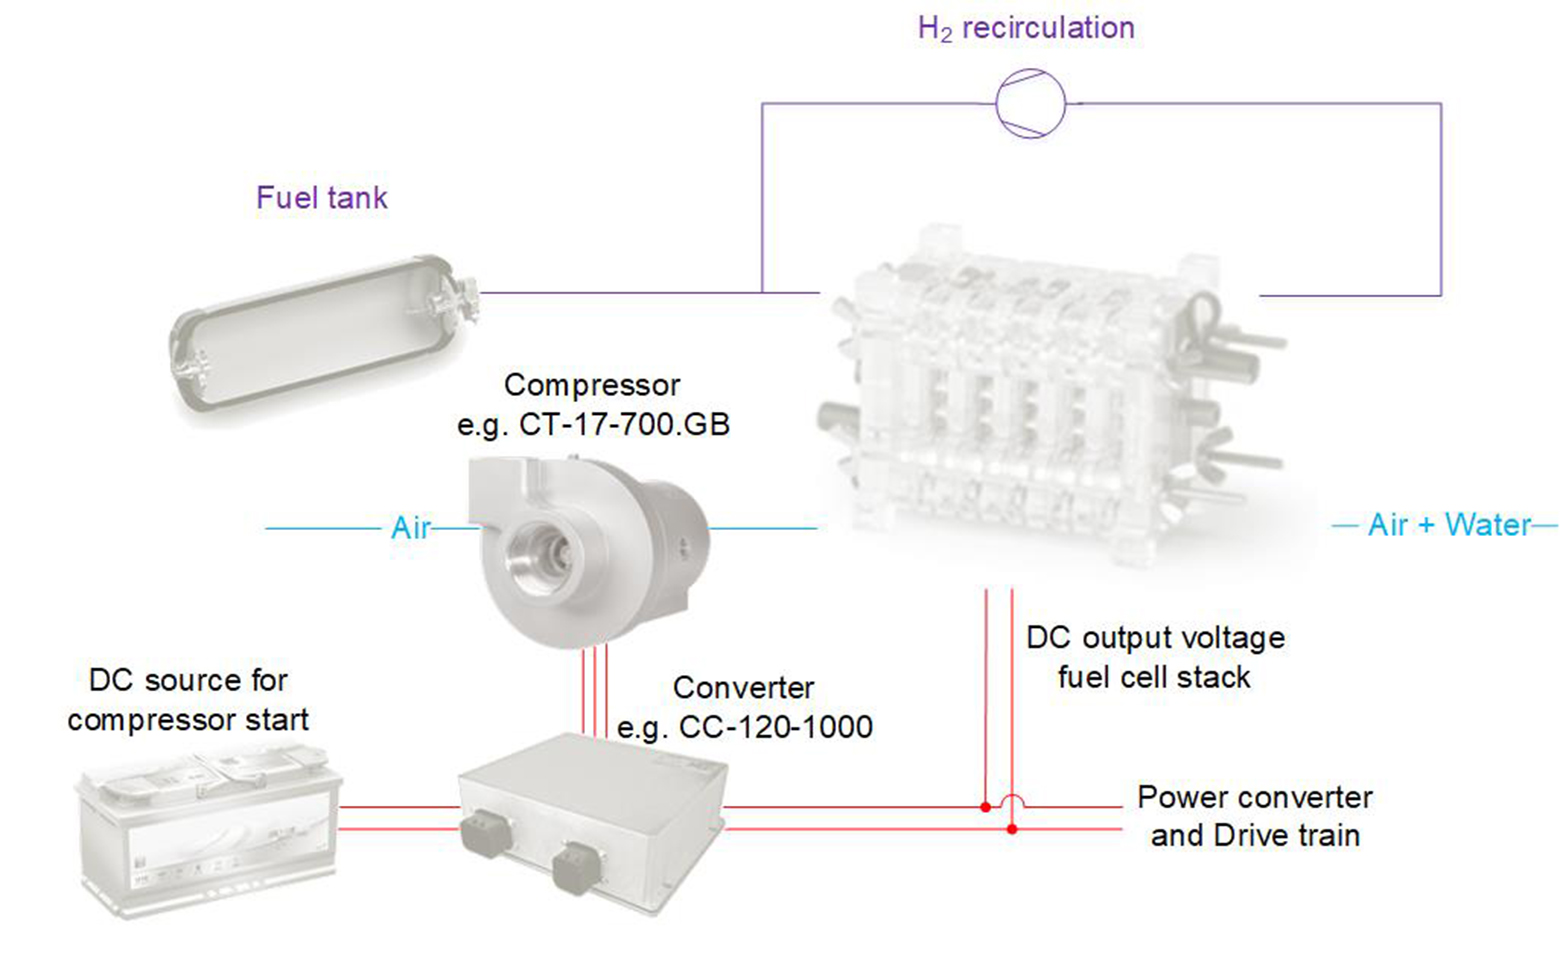 Application-specific compressor converter system